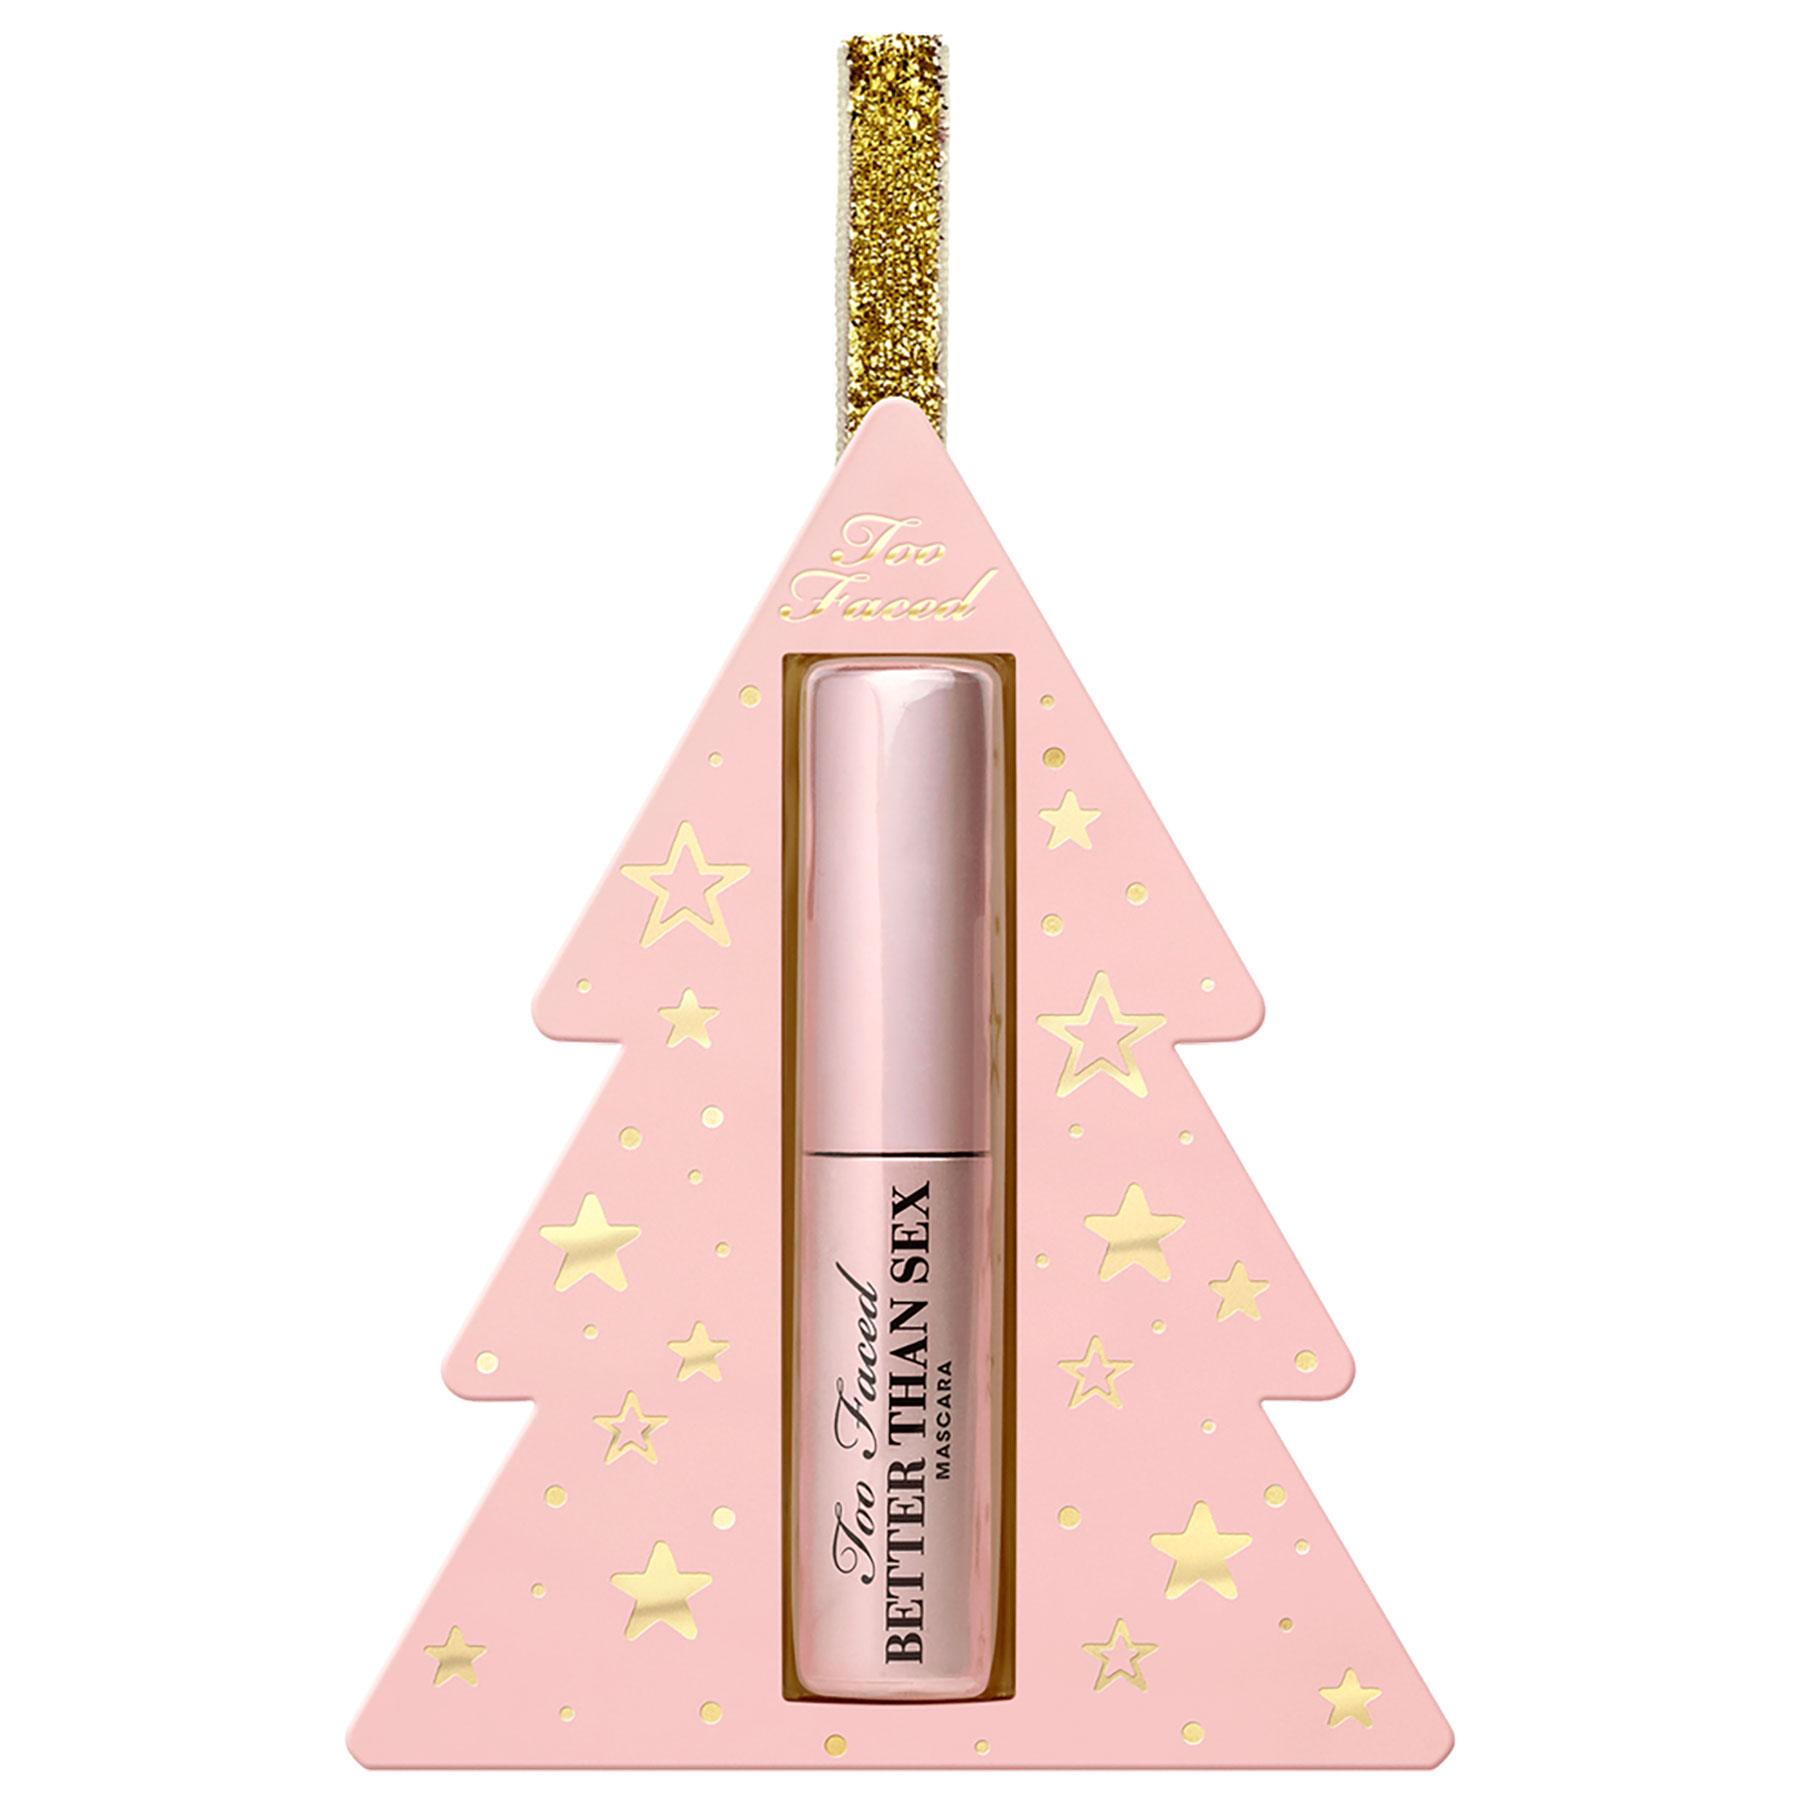 'Christmas Bauble' Miniature Size Makeup Gift Set Black & Gold Lanc\u00f4me